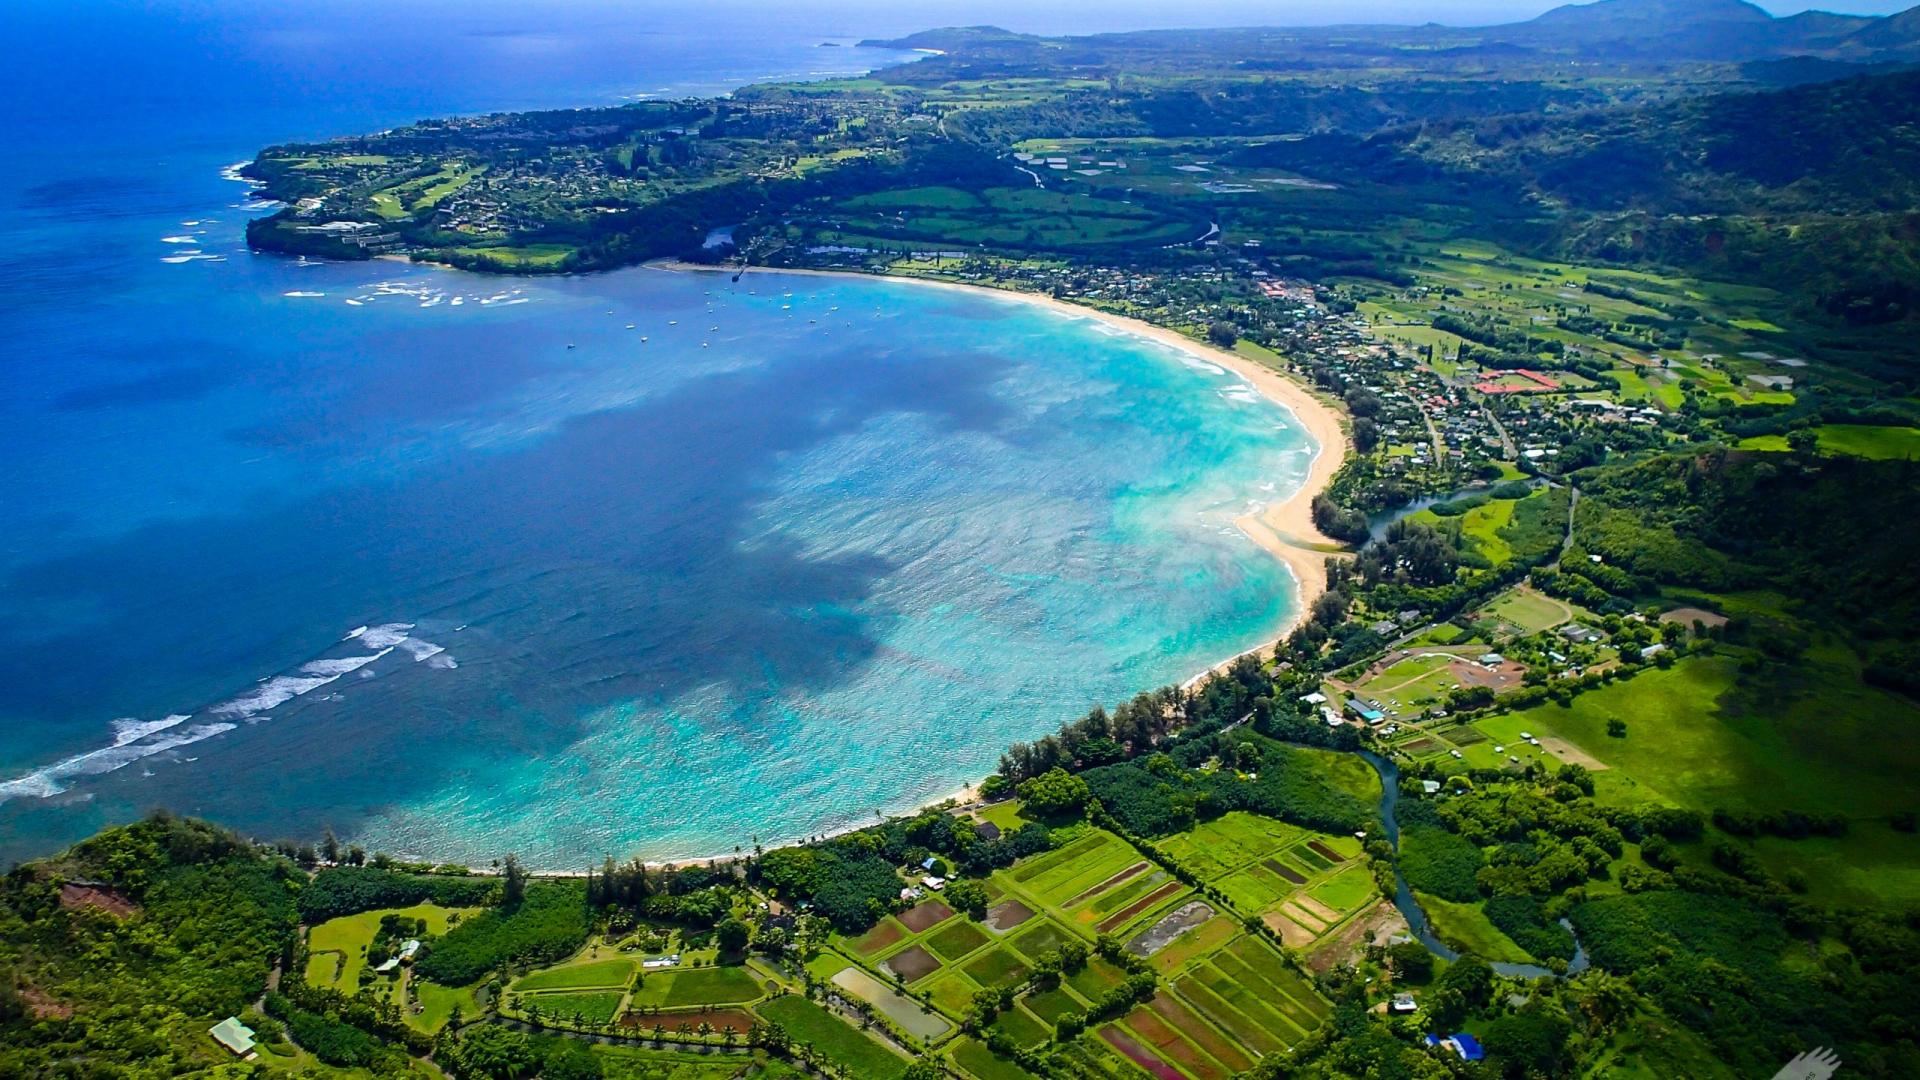 Kauai Vacation Packages - The Garden Isle | Hawaii | Lisa Hoppe Travel